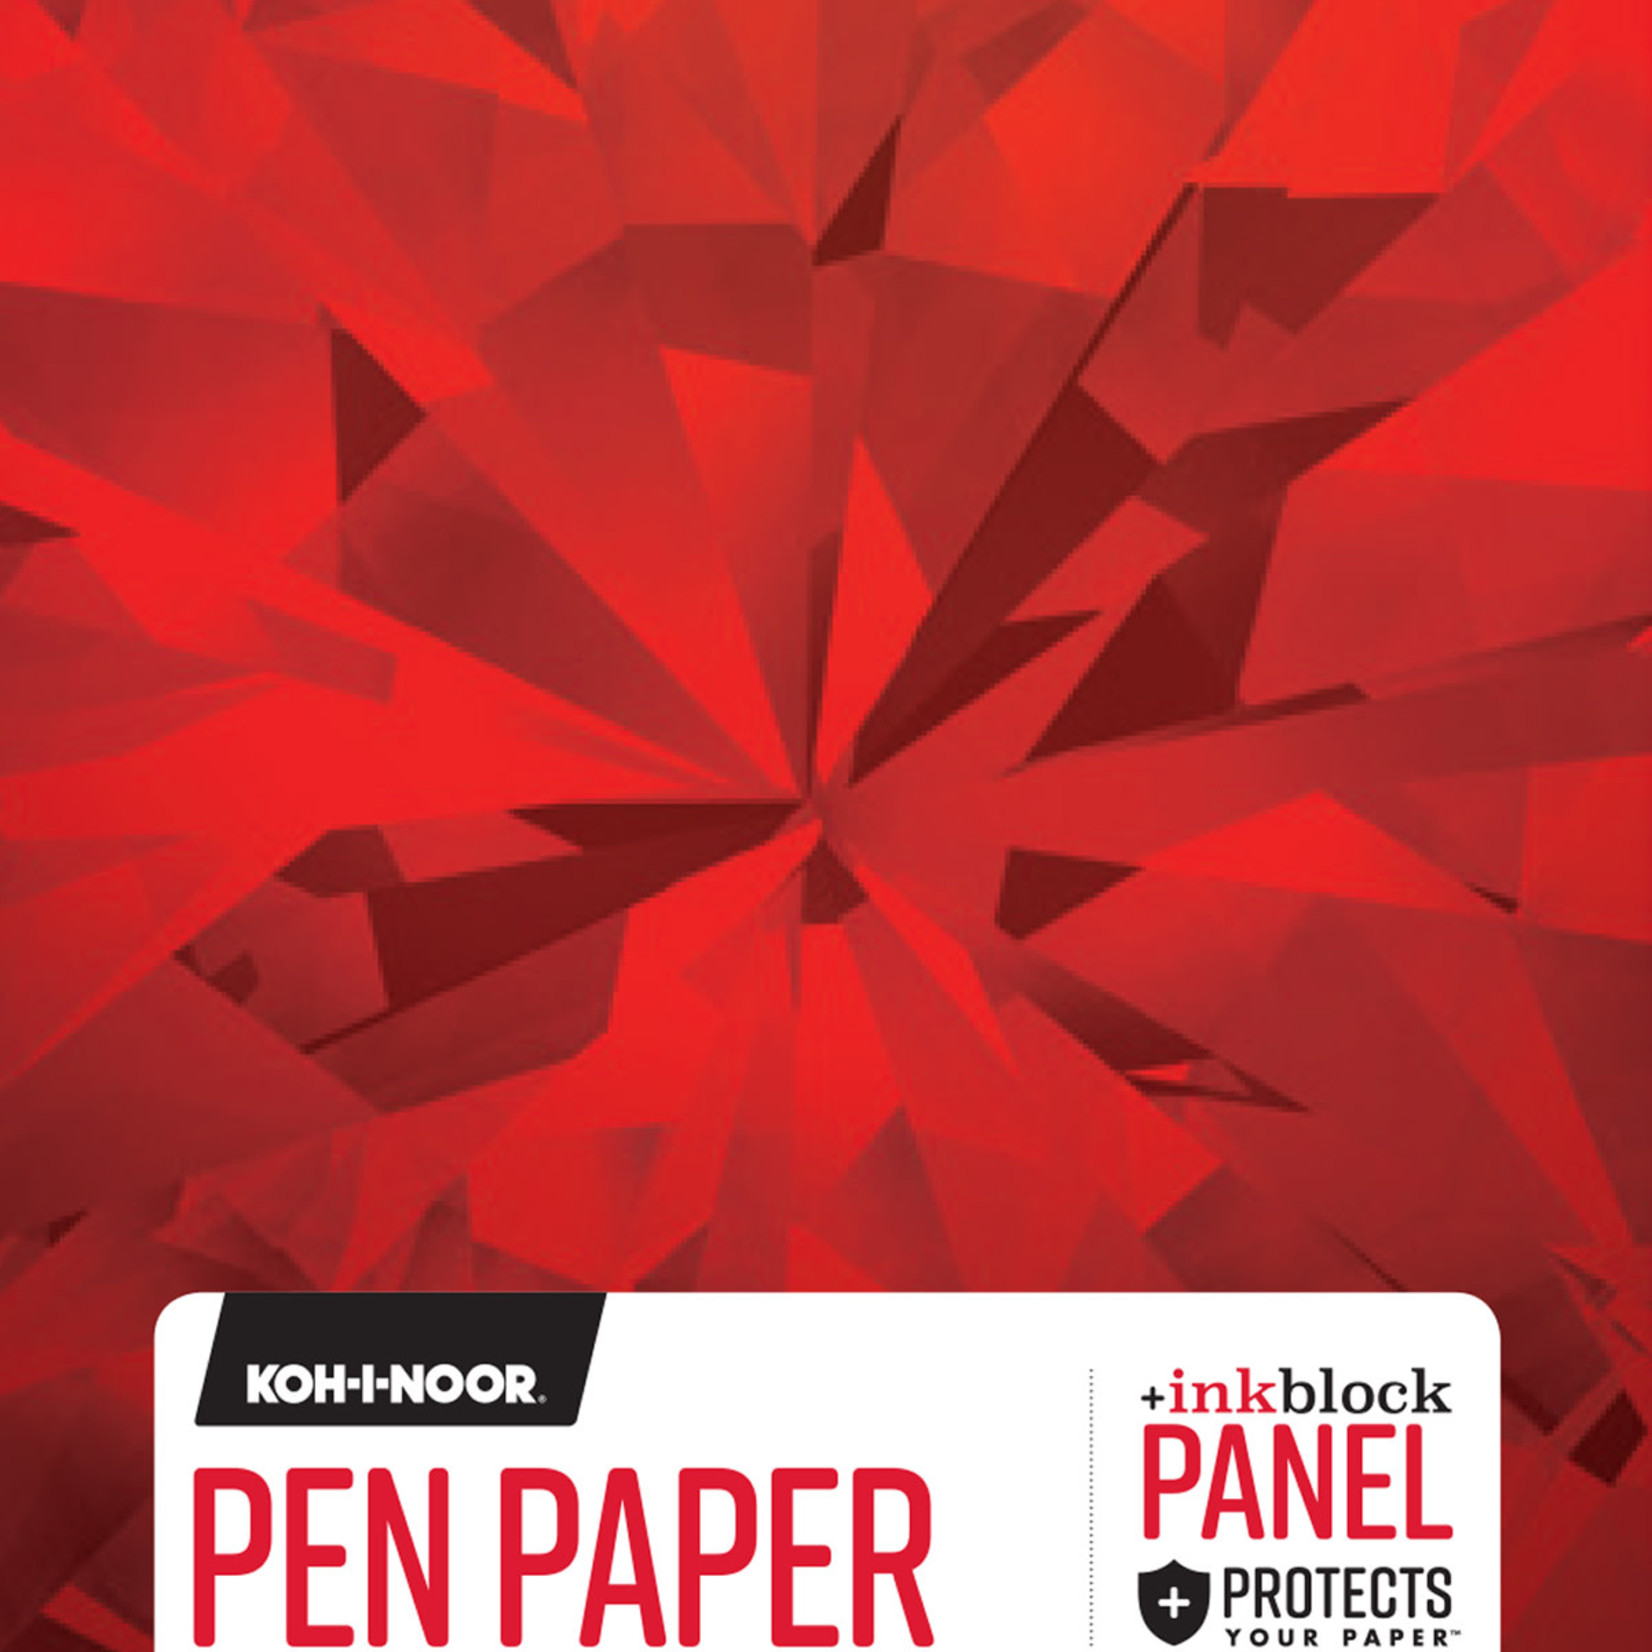 Koh-i-Noor 9" x 12" 80 lb. (118 gsm) Pen Paper (InkBlock Panel) 60 Sheet Pad